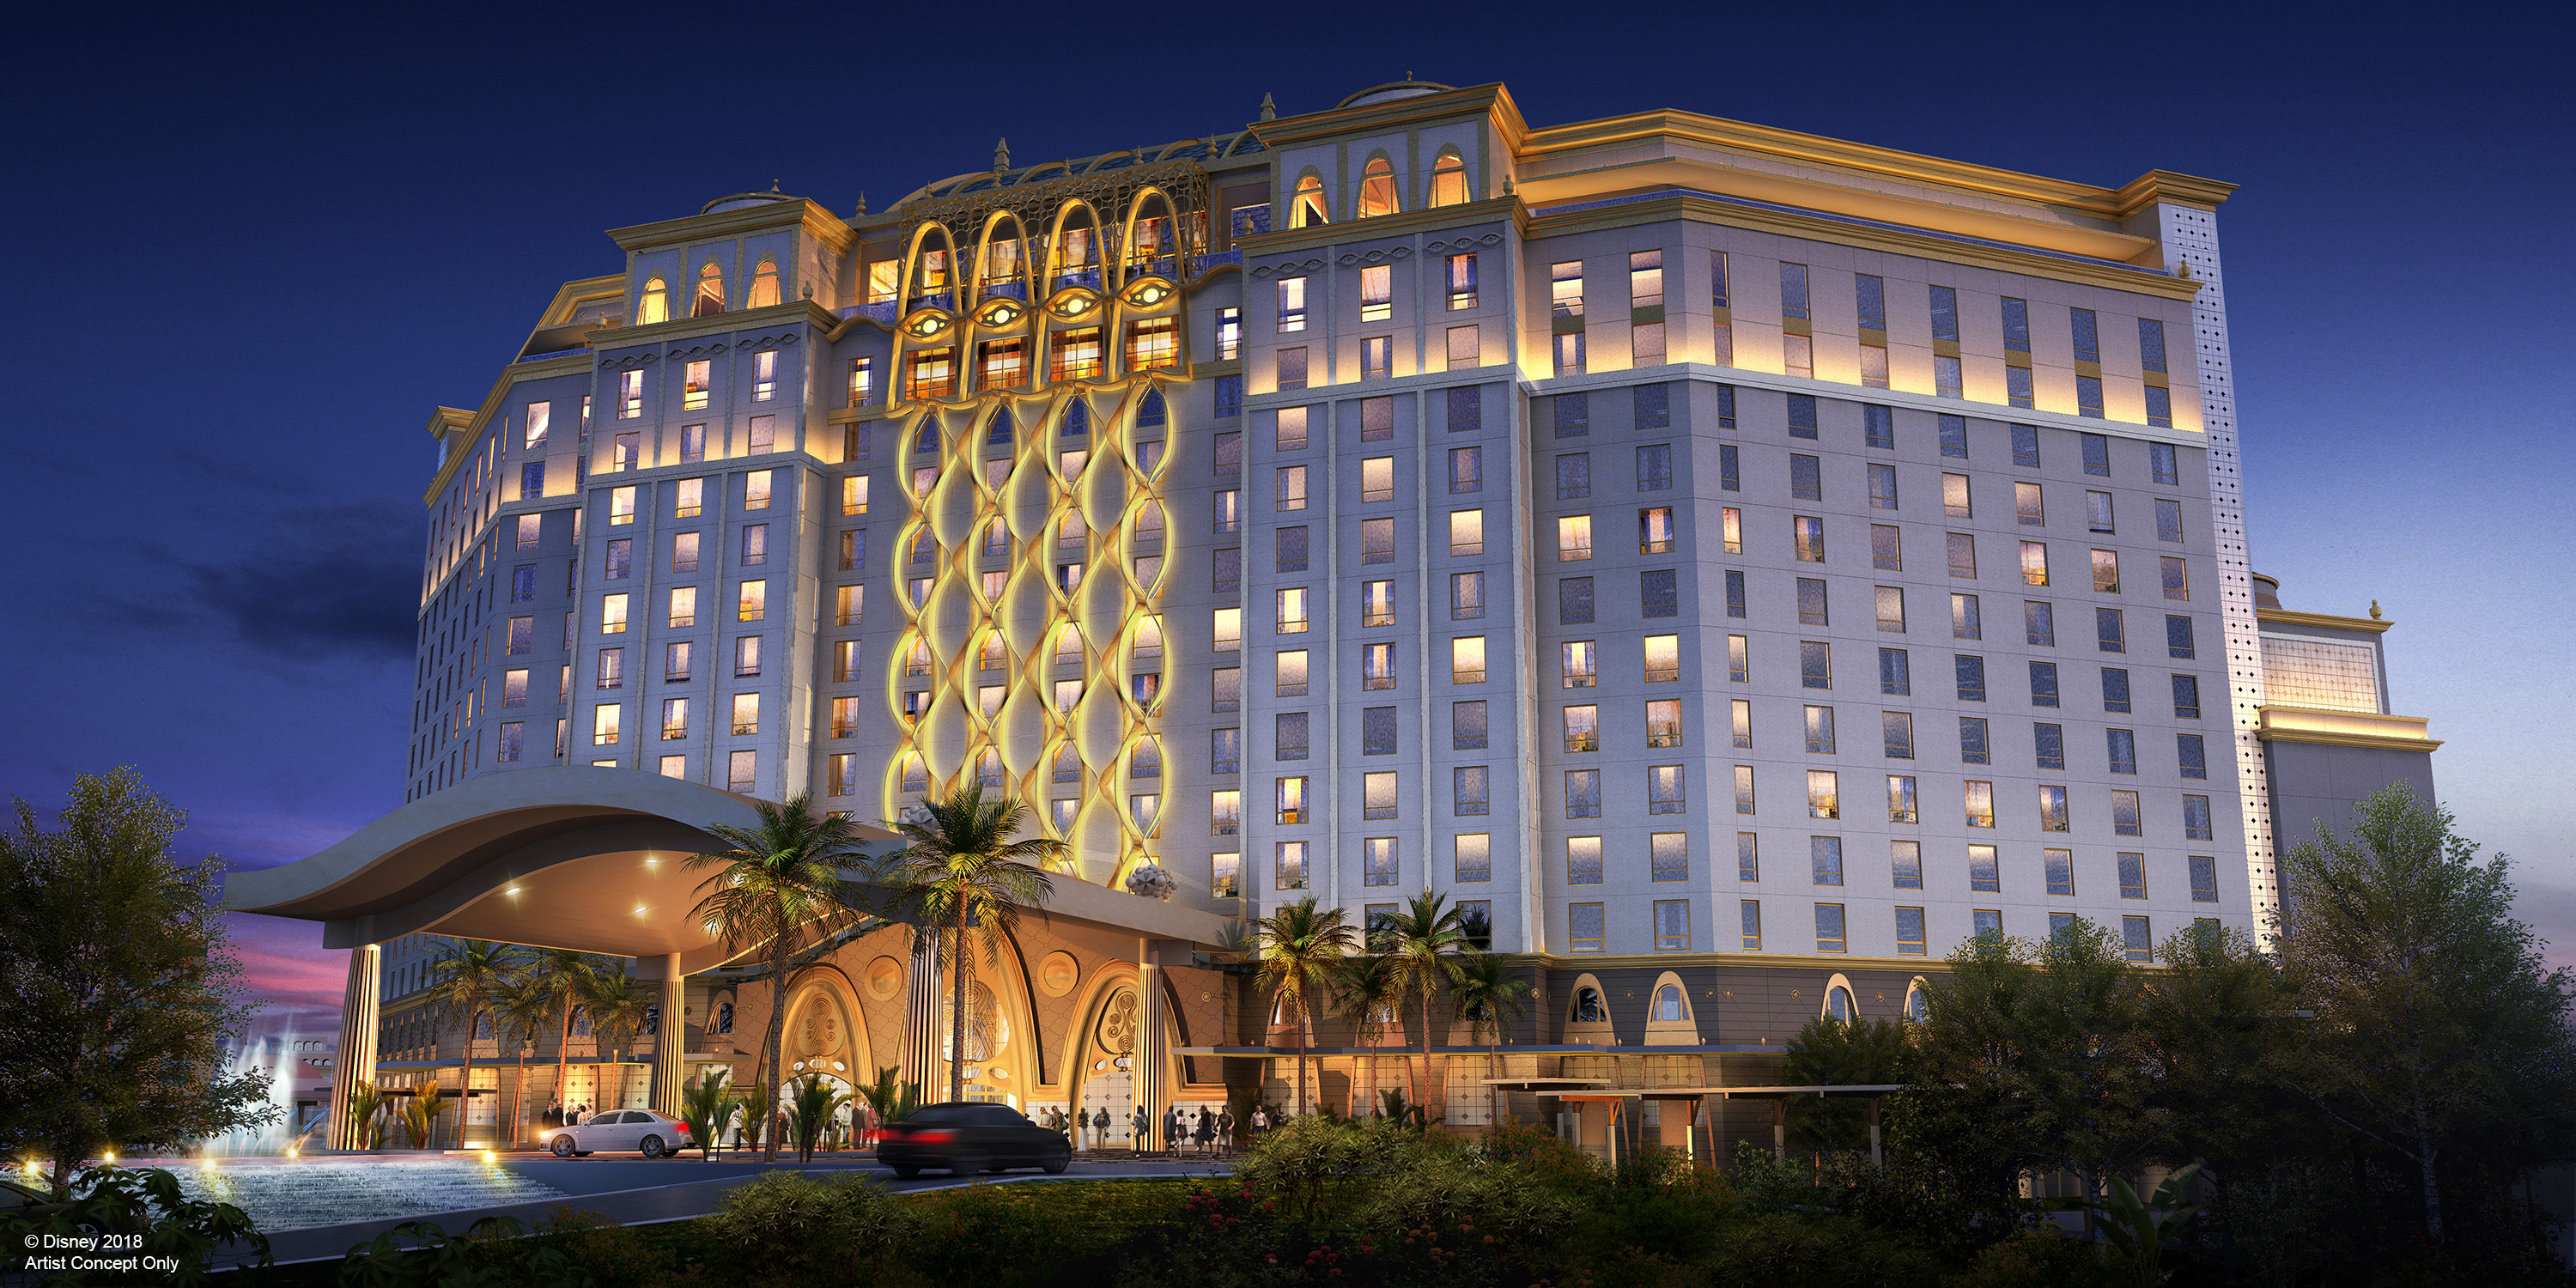 Hotel Coronado Spring - Disney Orlando - Forum Florida and Southeast USA